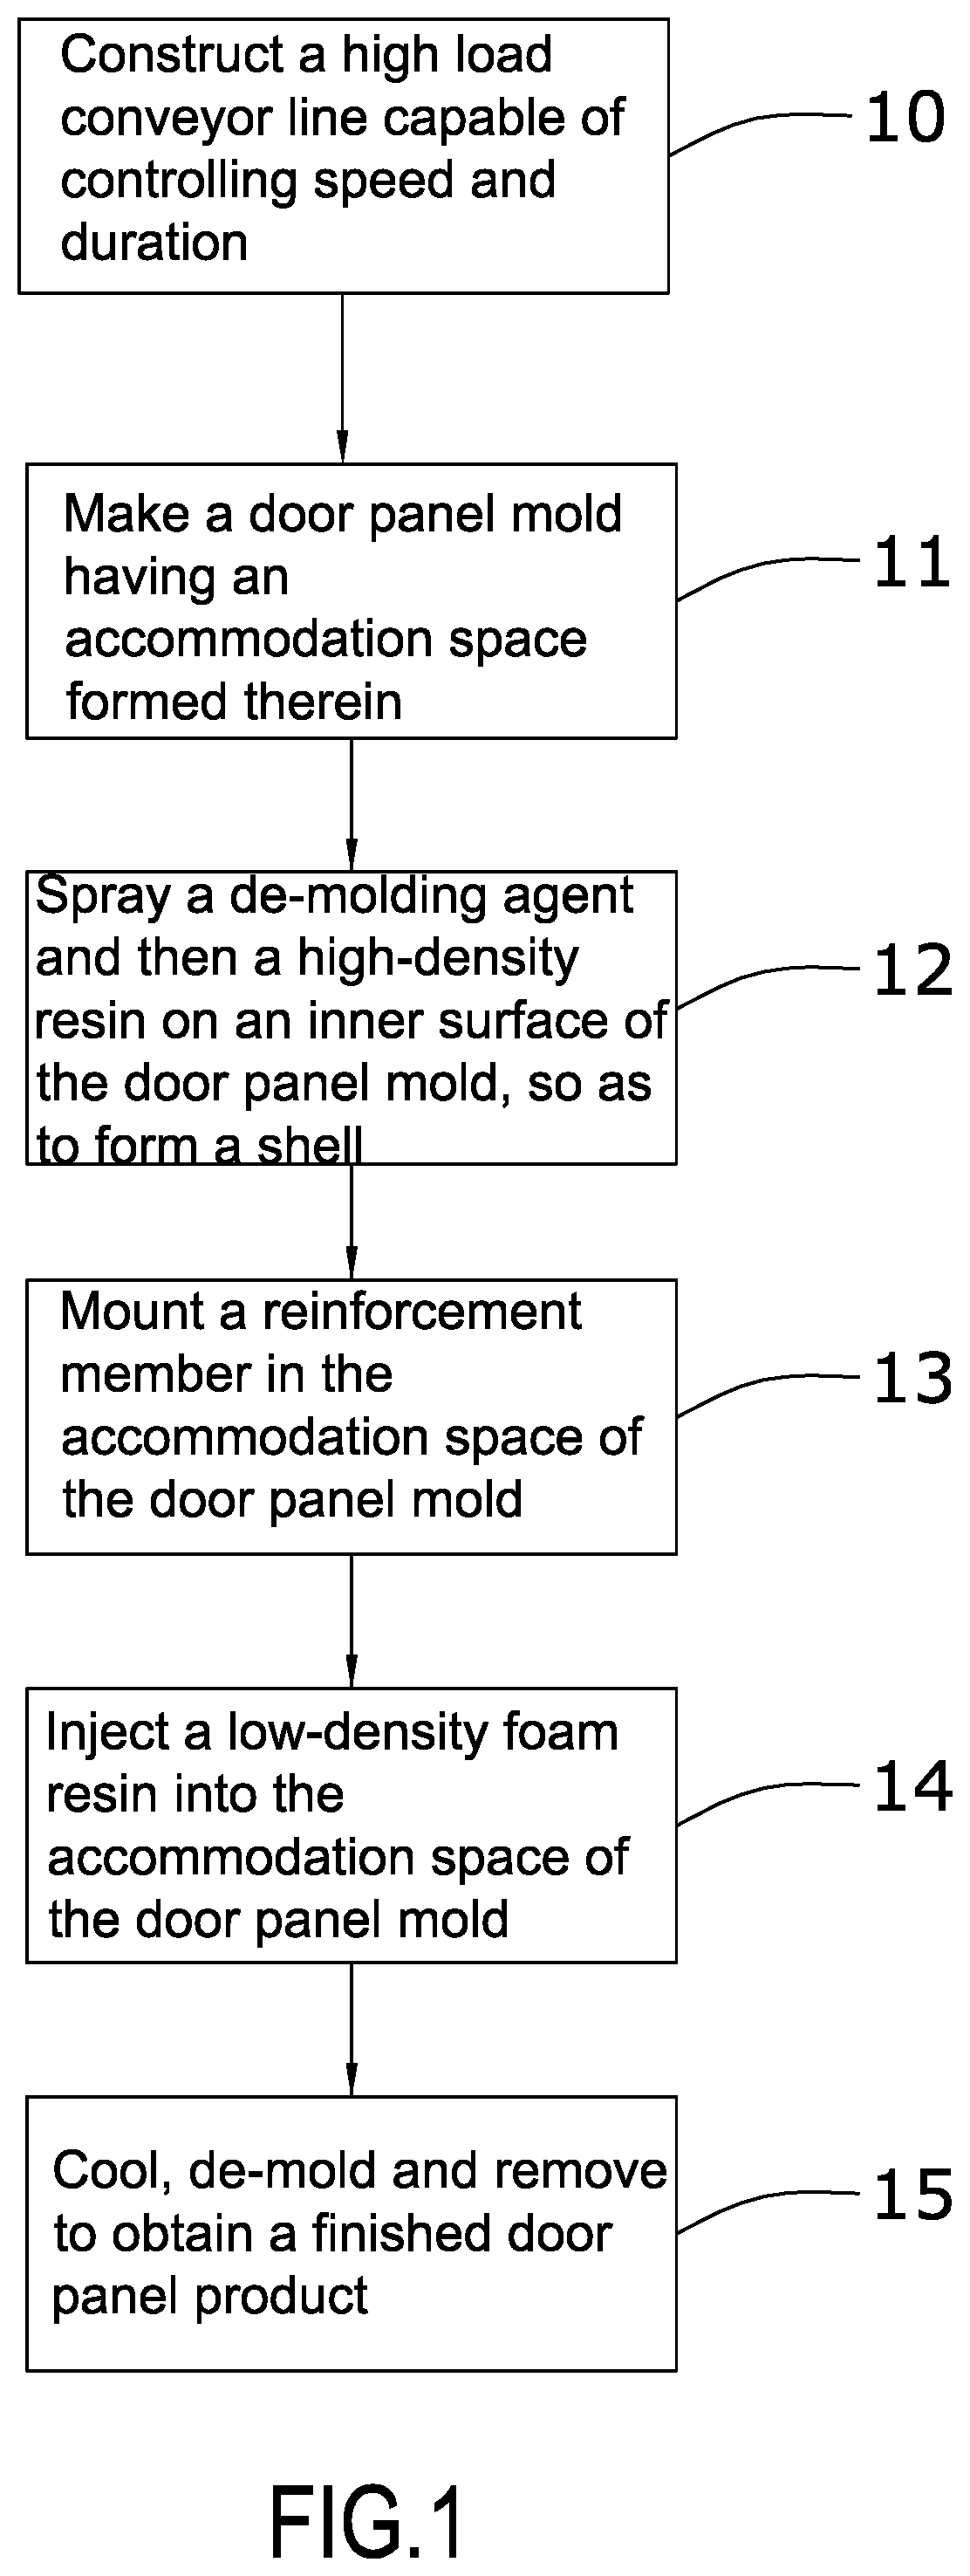 Door panel manufacturing process